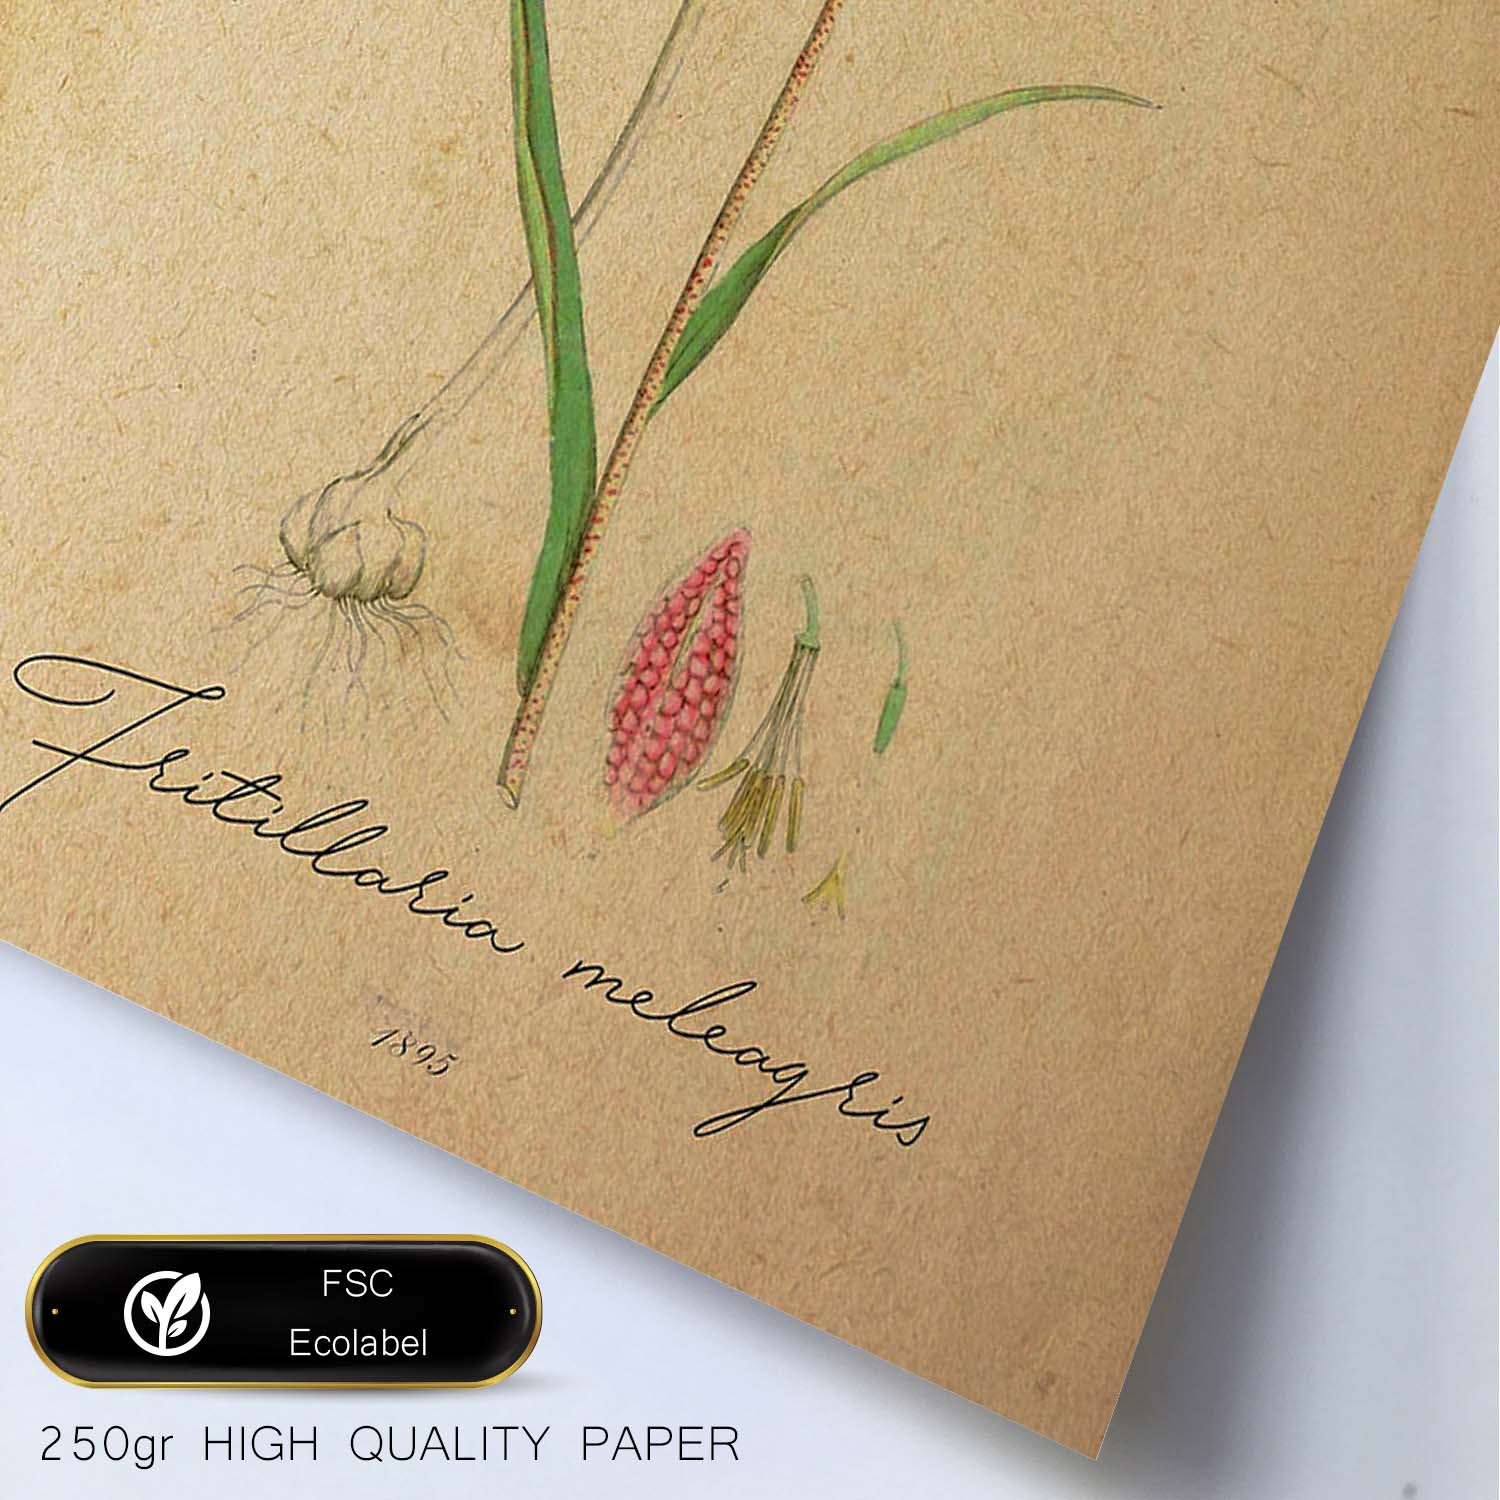 Poster de flores vintage. Lámina Troutish lilly con diseño vintage.-Artwork-Nacnic-Nacnic Estudio SL